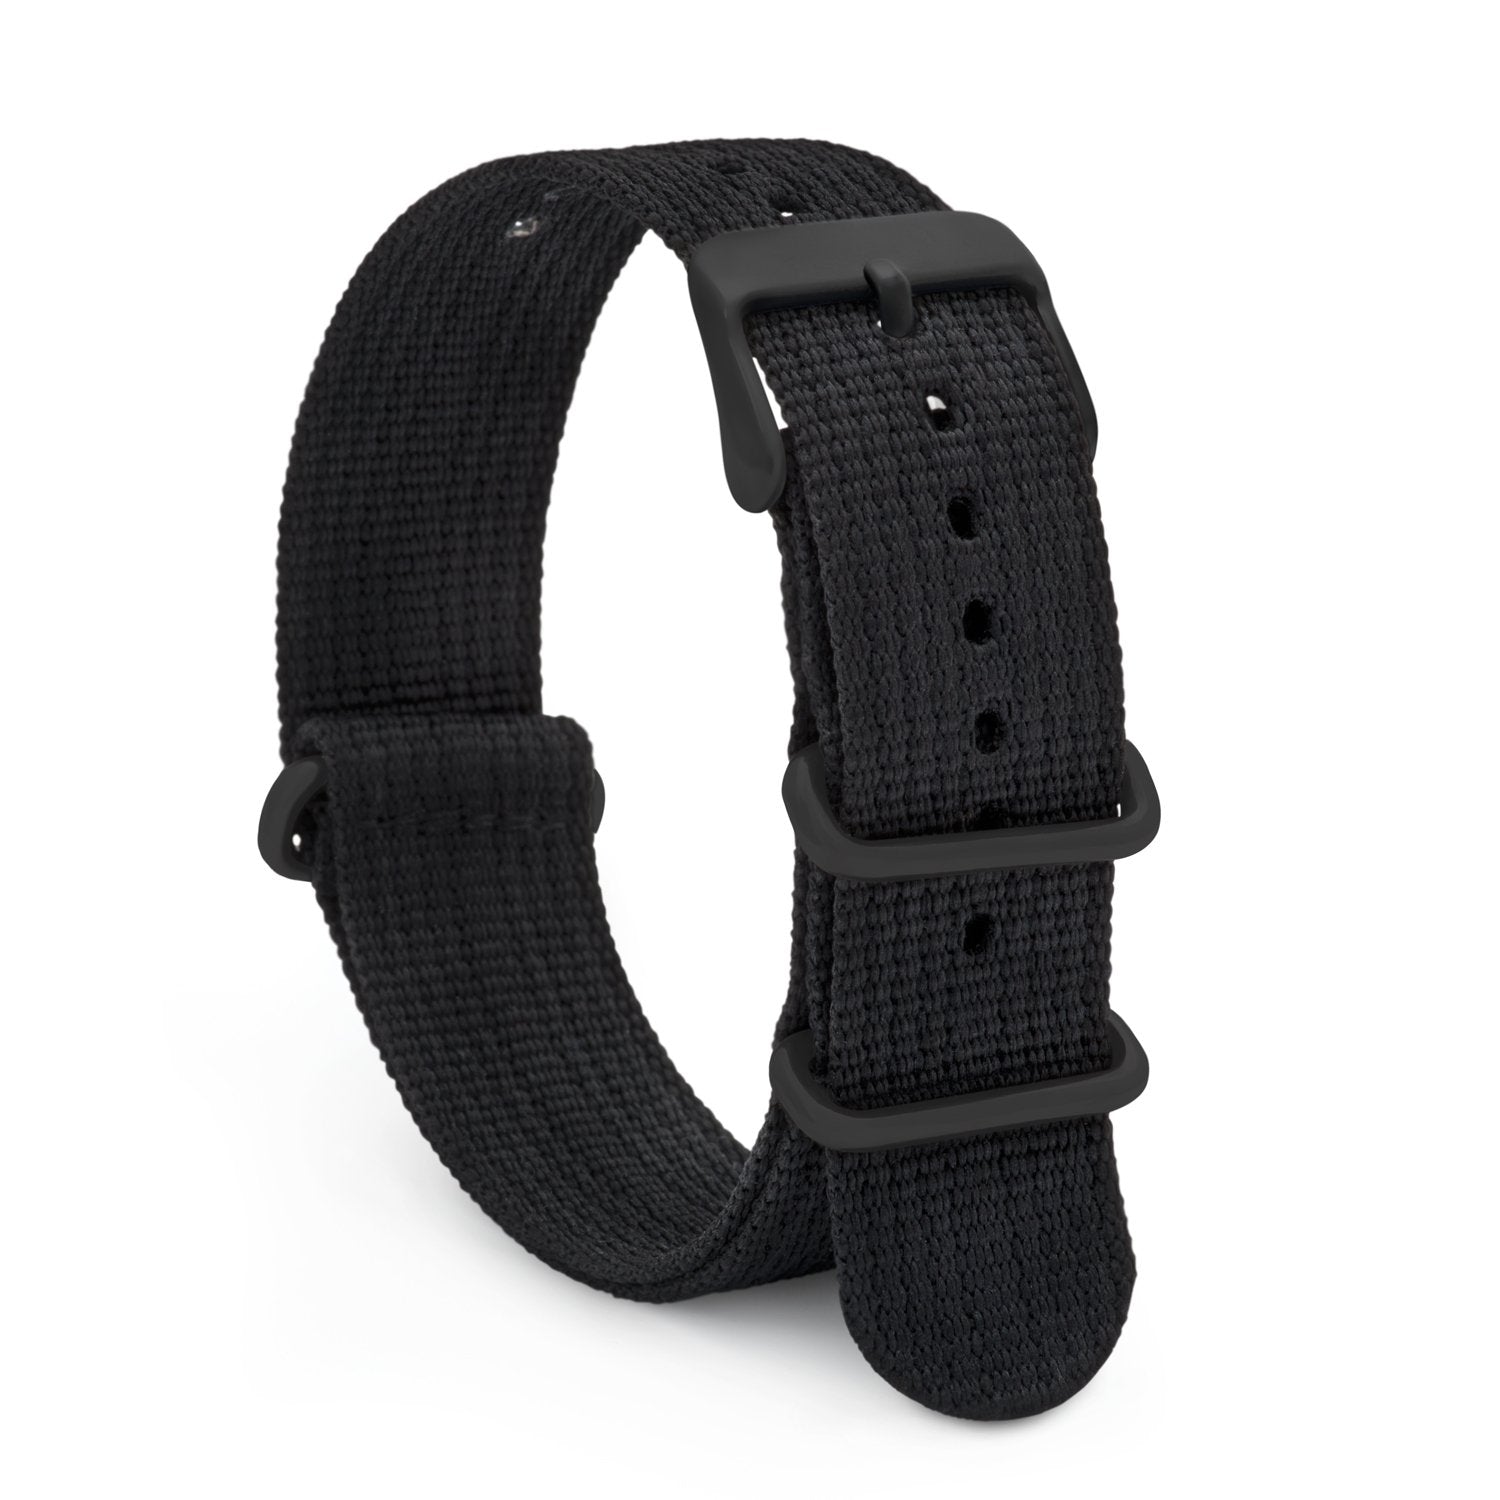 Fabric strap - NATO Watch Strap Black / Yellow Single Stripe made of Nylon  - Superior Quality